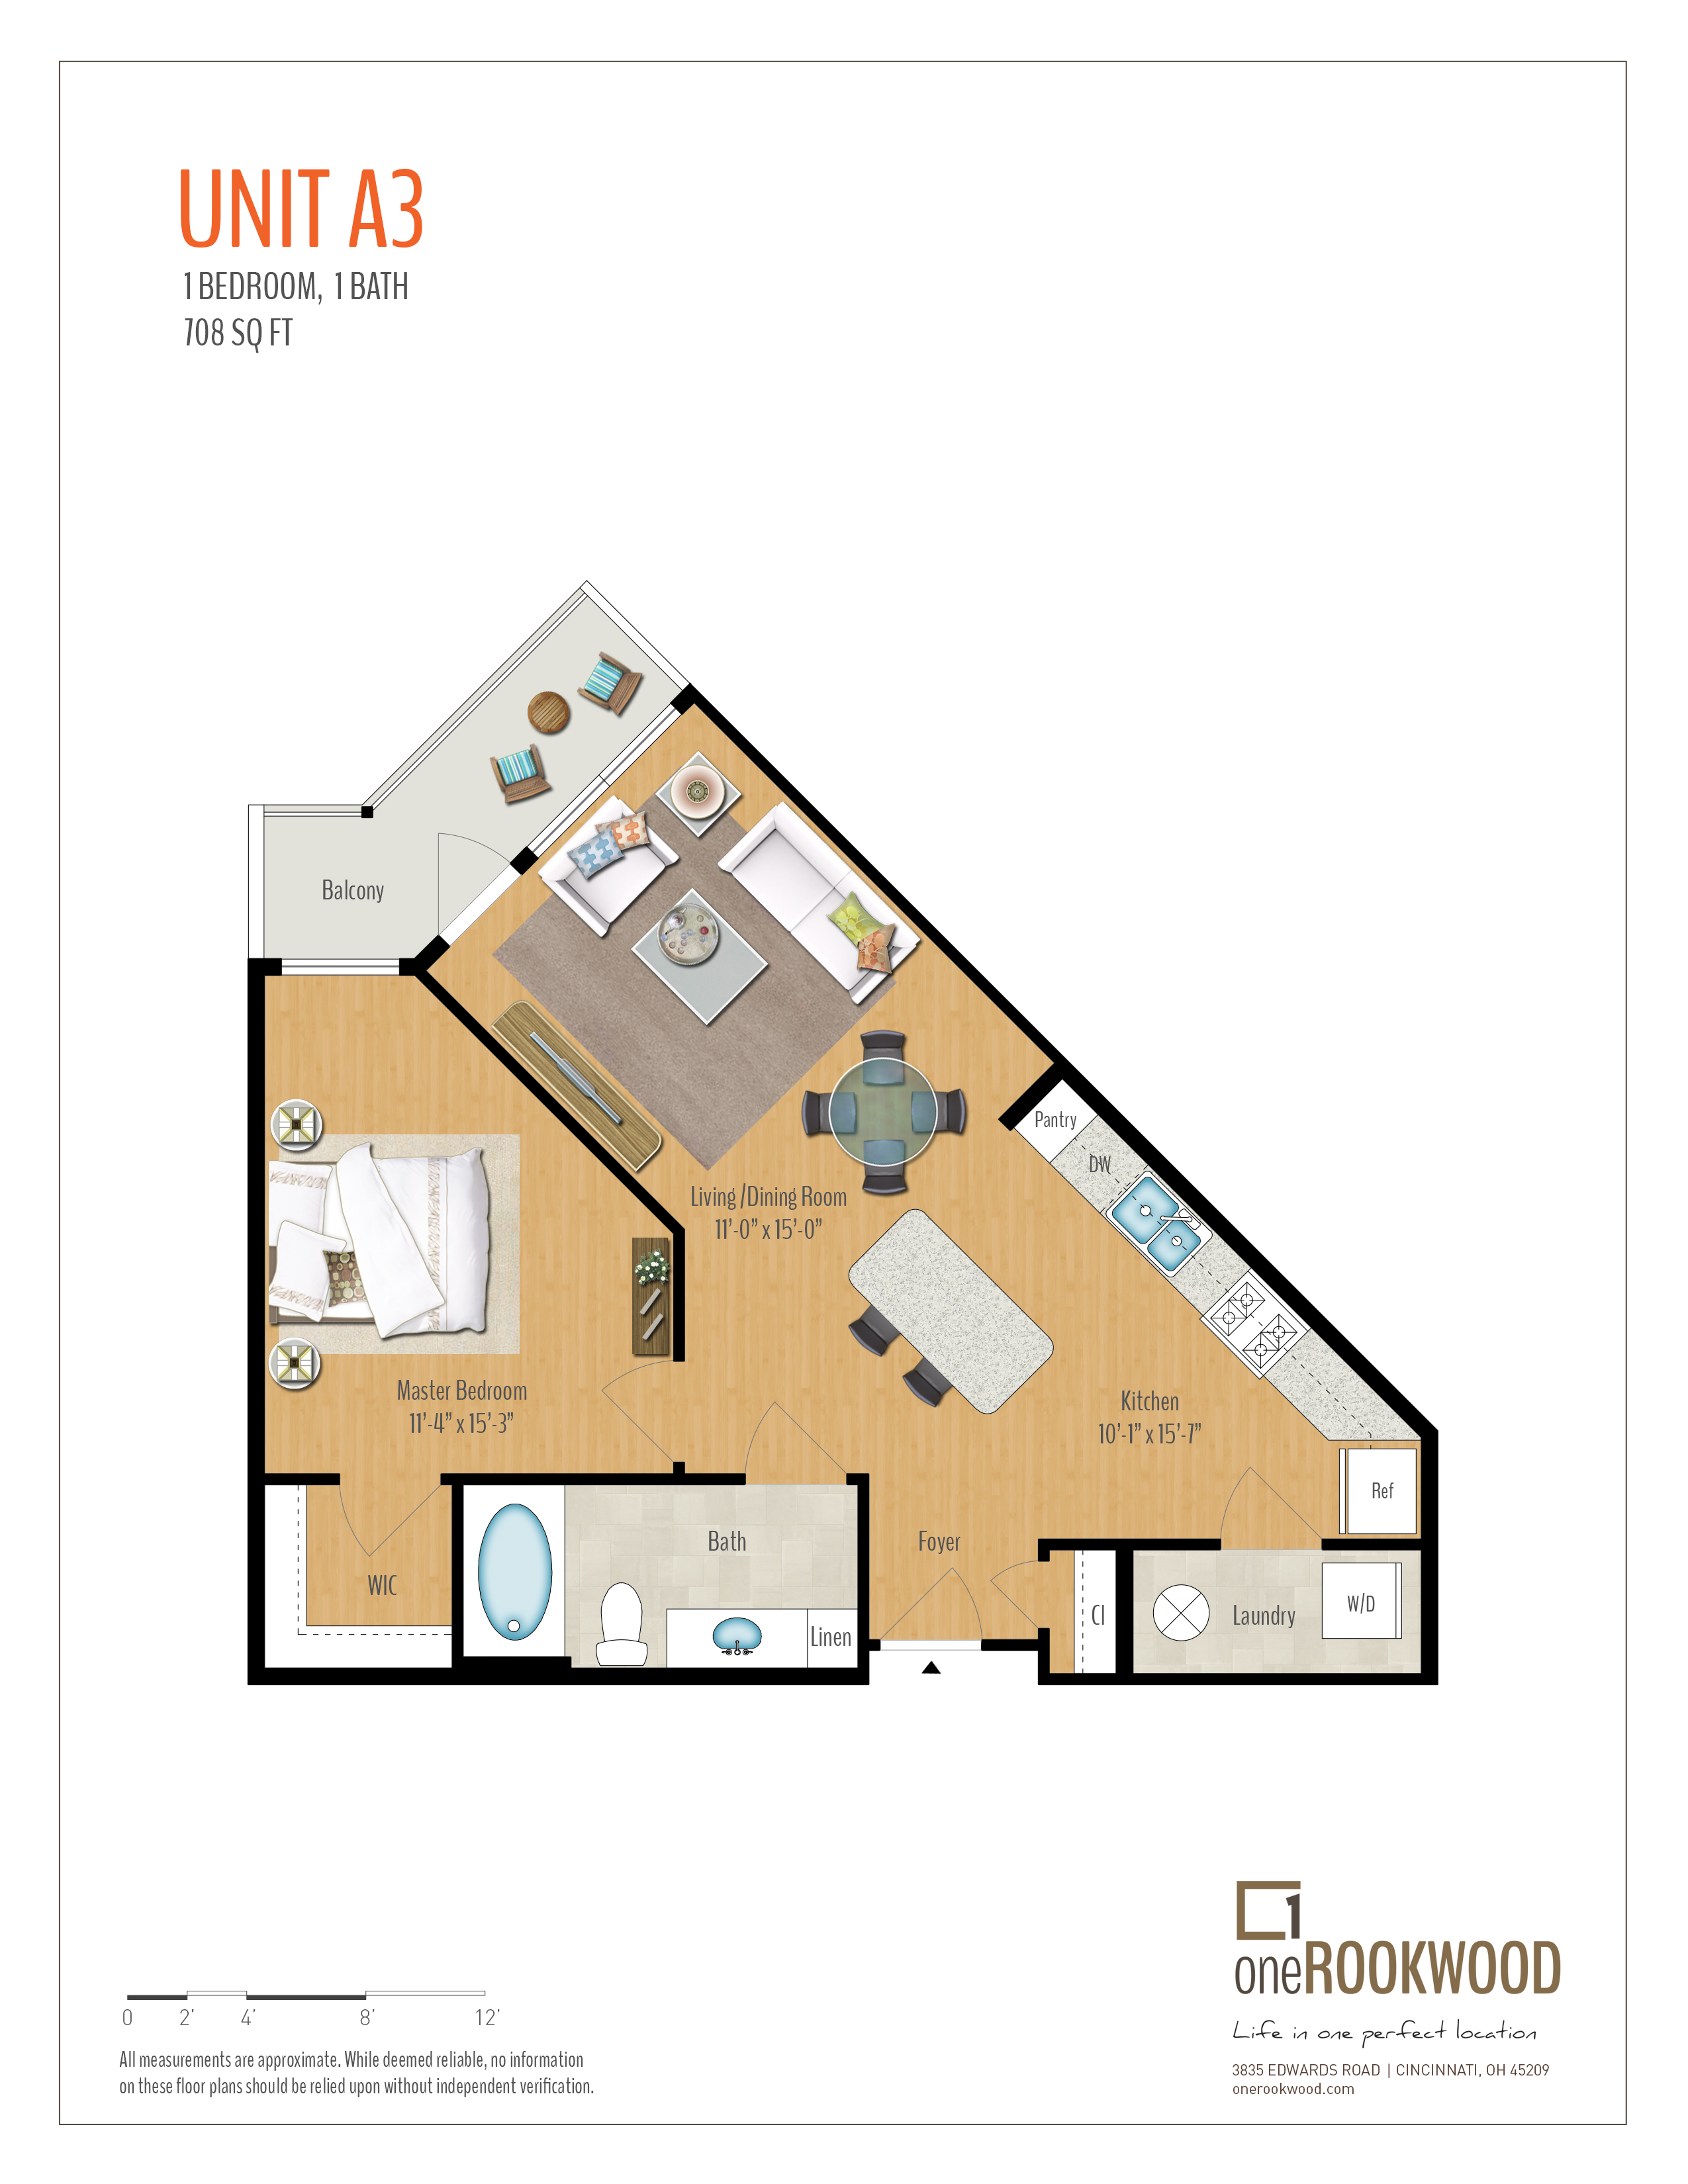 OneRookwood-Unit A3-FloorPlan-Print.jpg